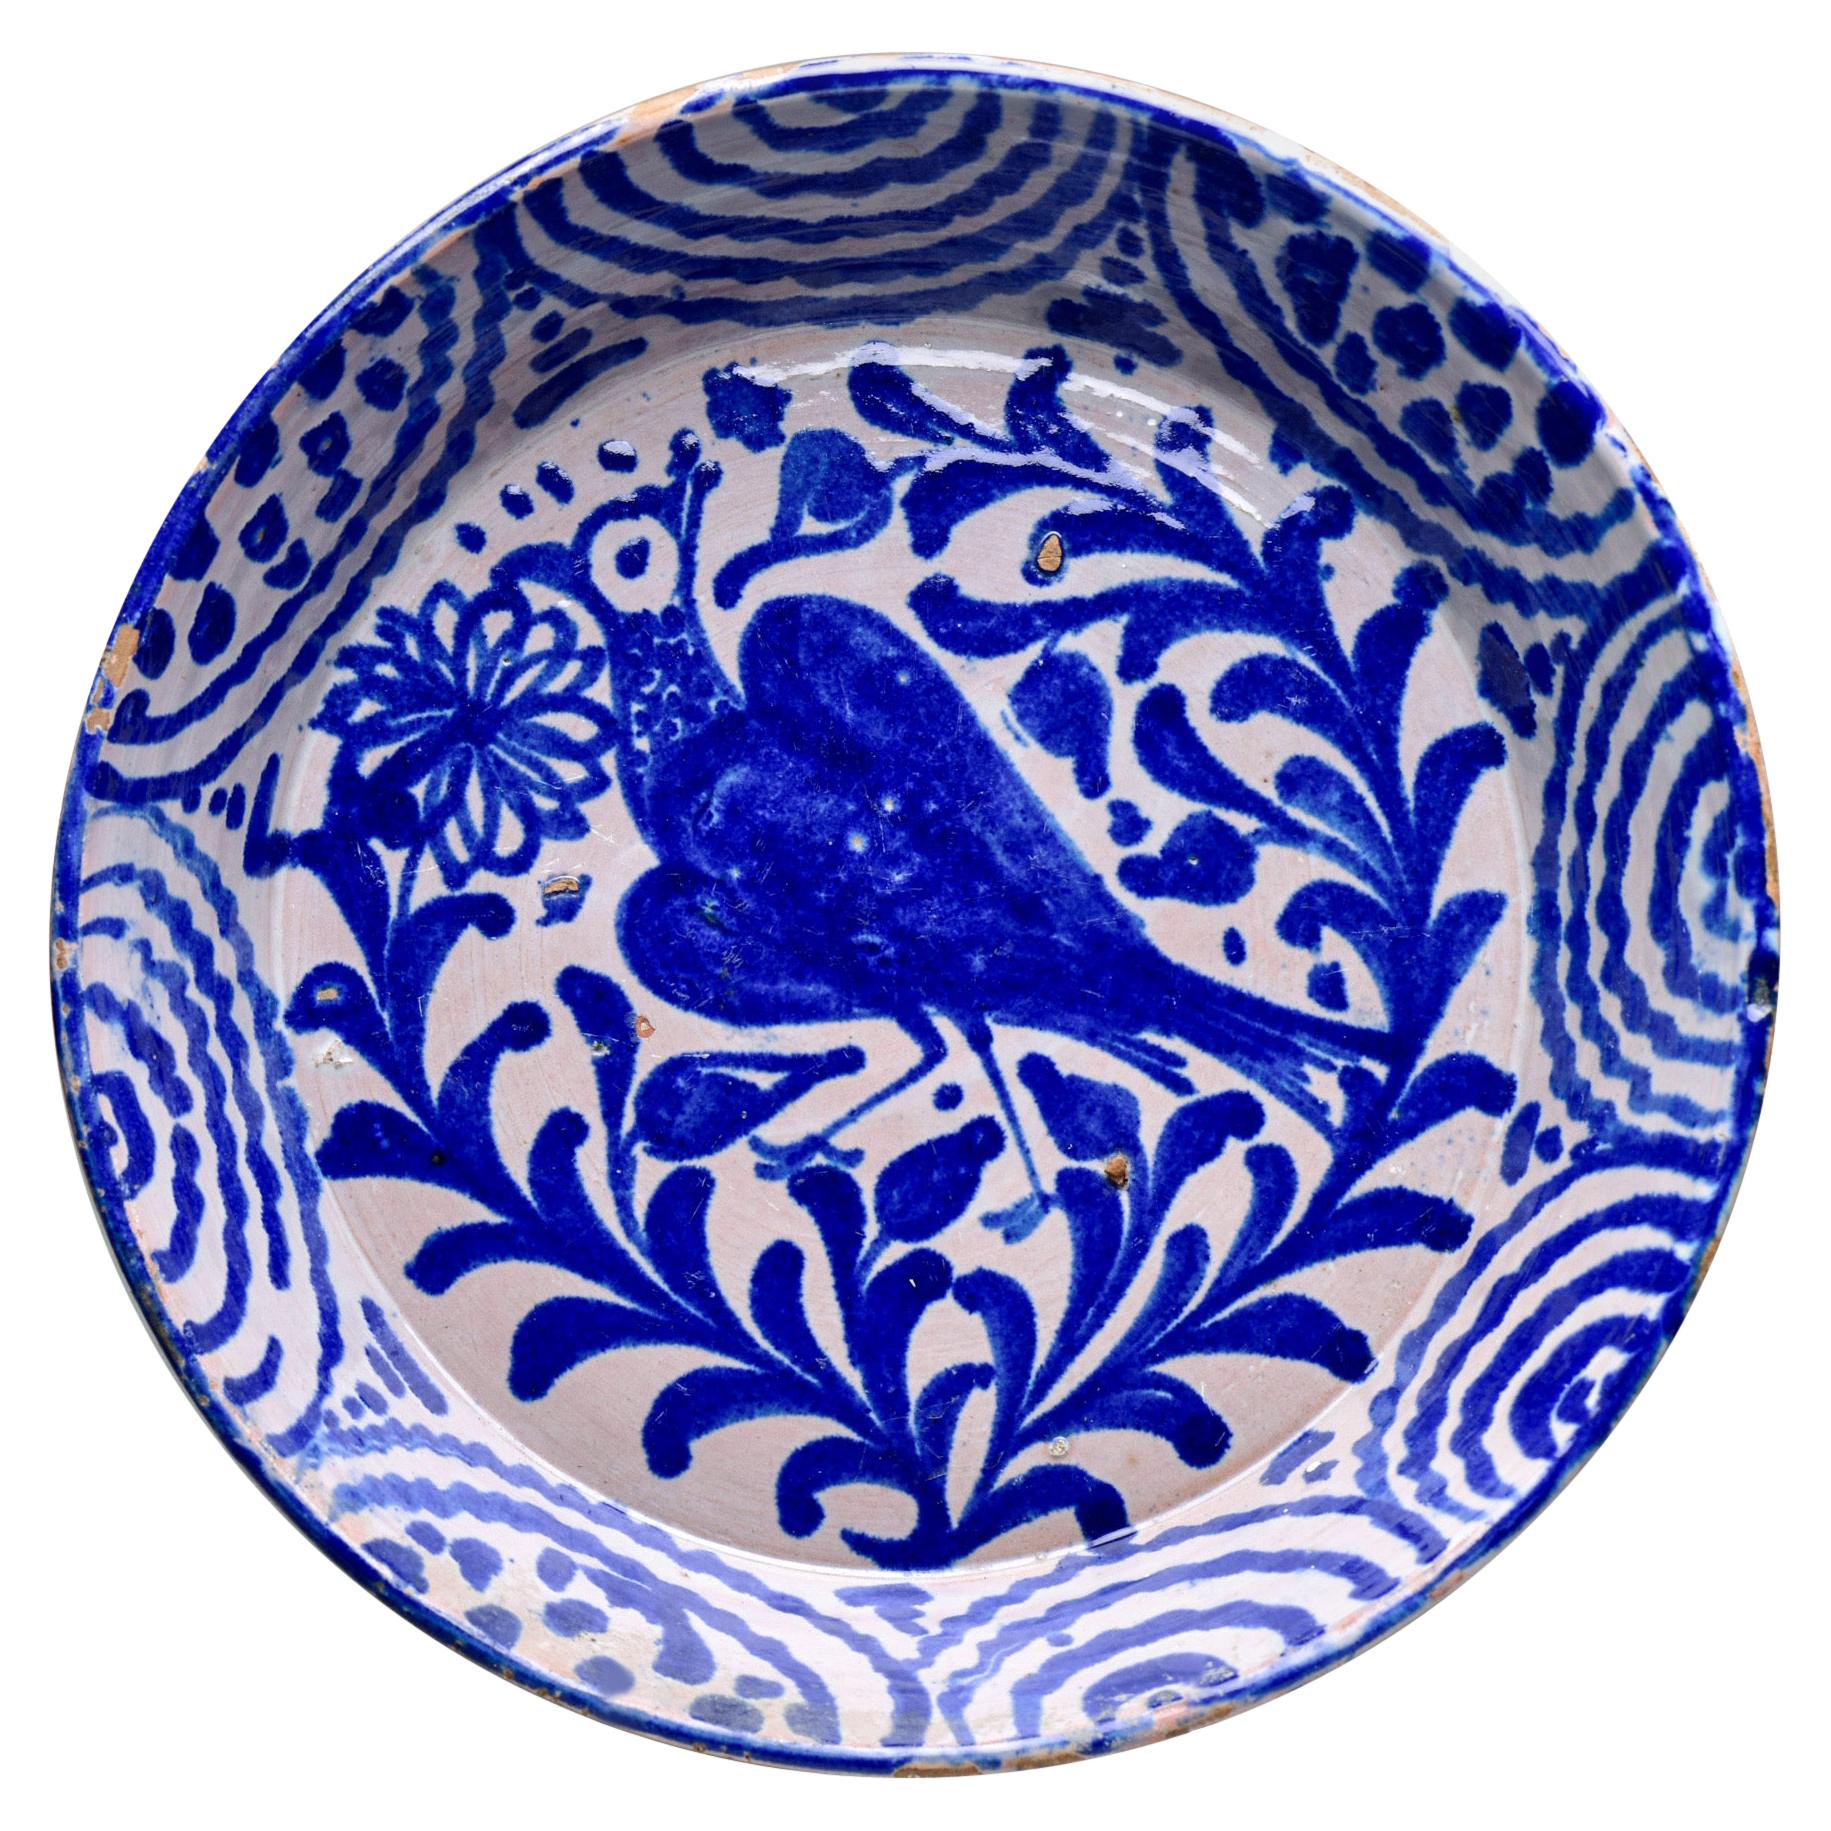 19th C Fajalauza Blue White Spanish Glazed Terra Cotta Bowl with Crested Bird